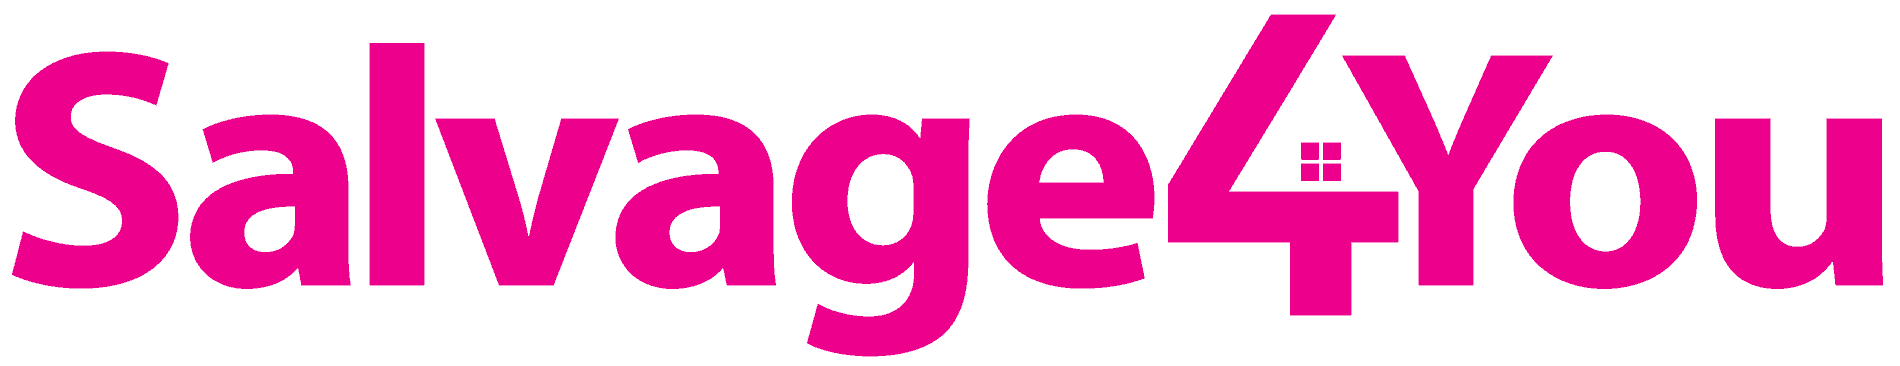 Salvage4You Logo